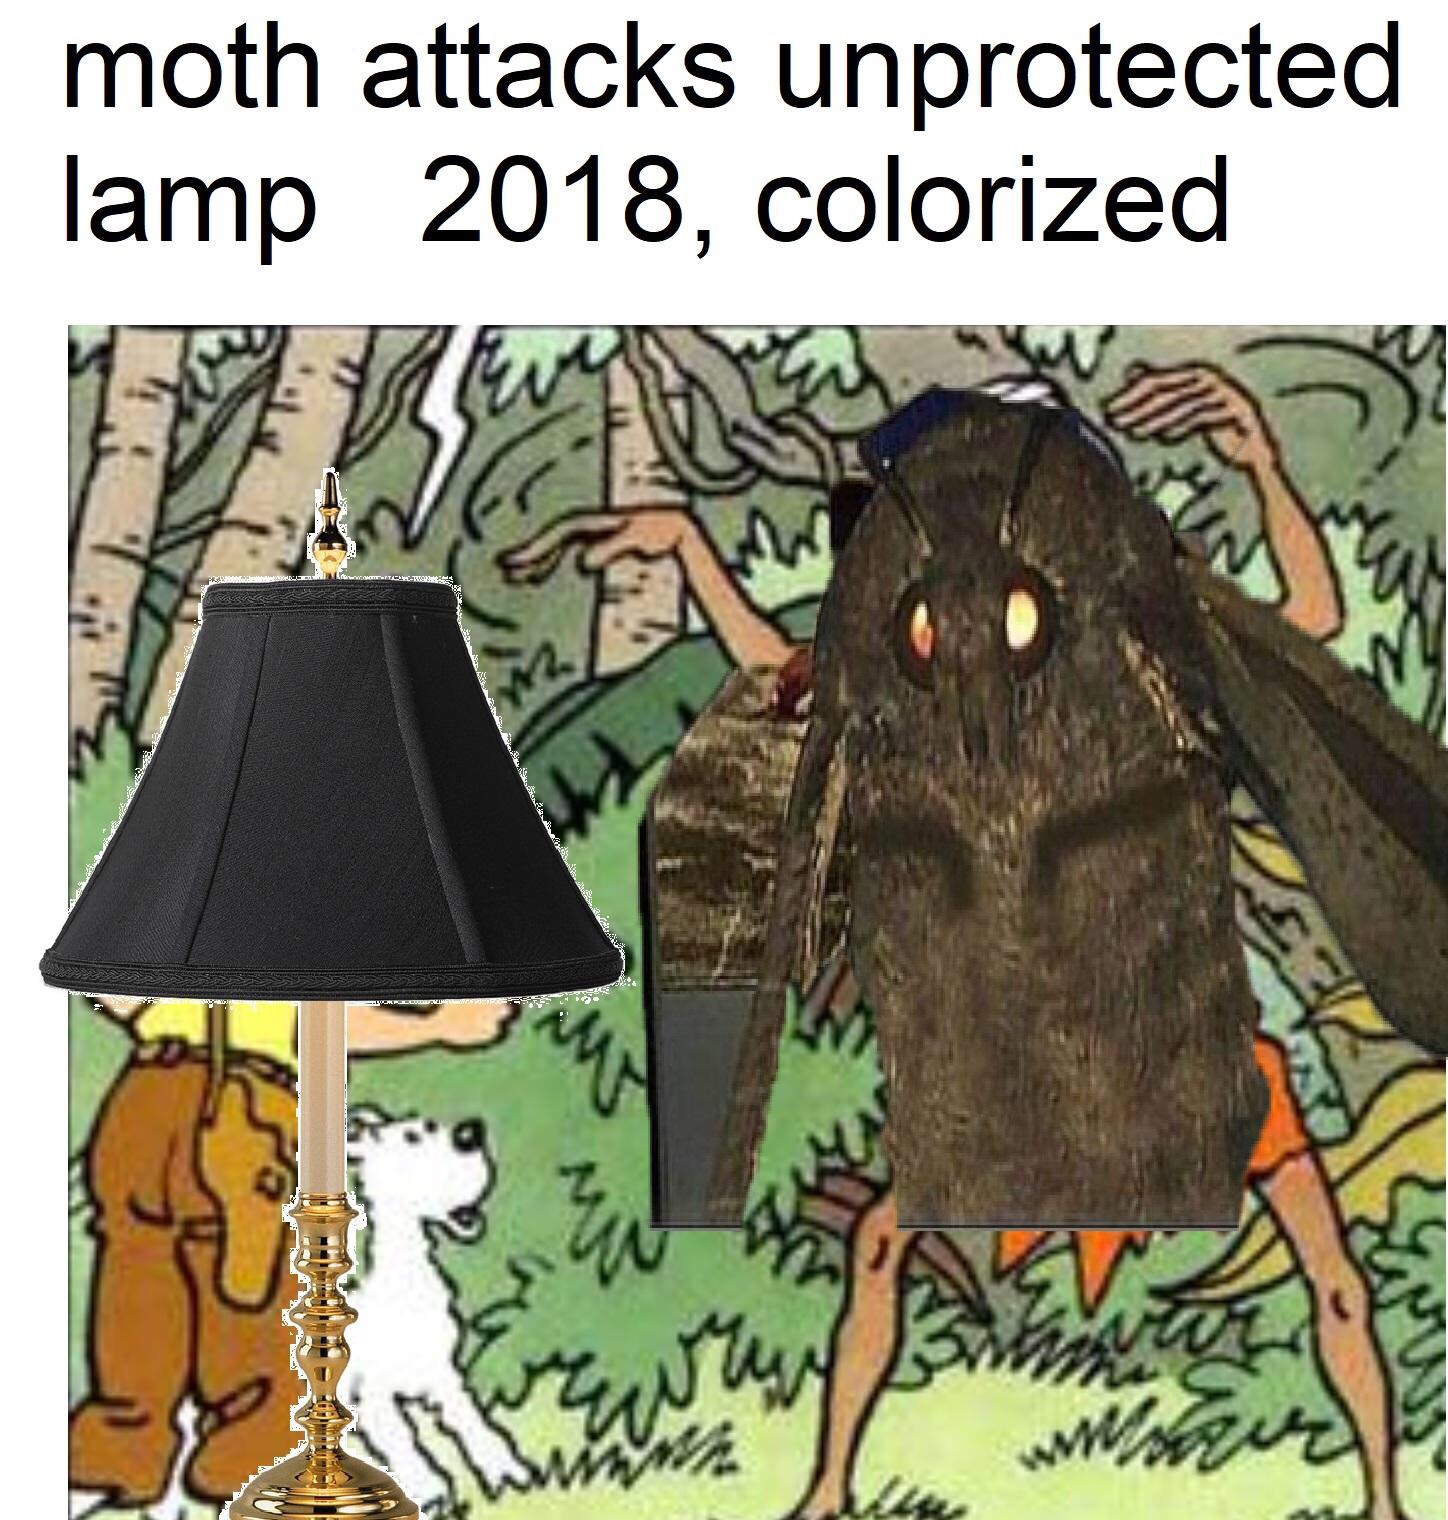 new moth meme - moth attacks unprotected lamp 2018, colorized